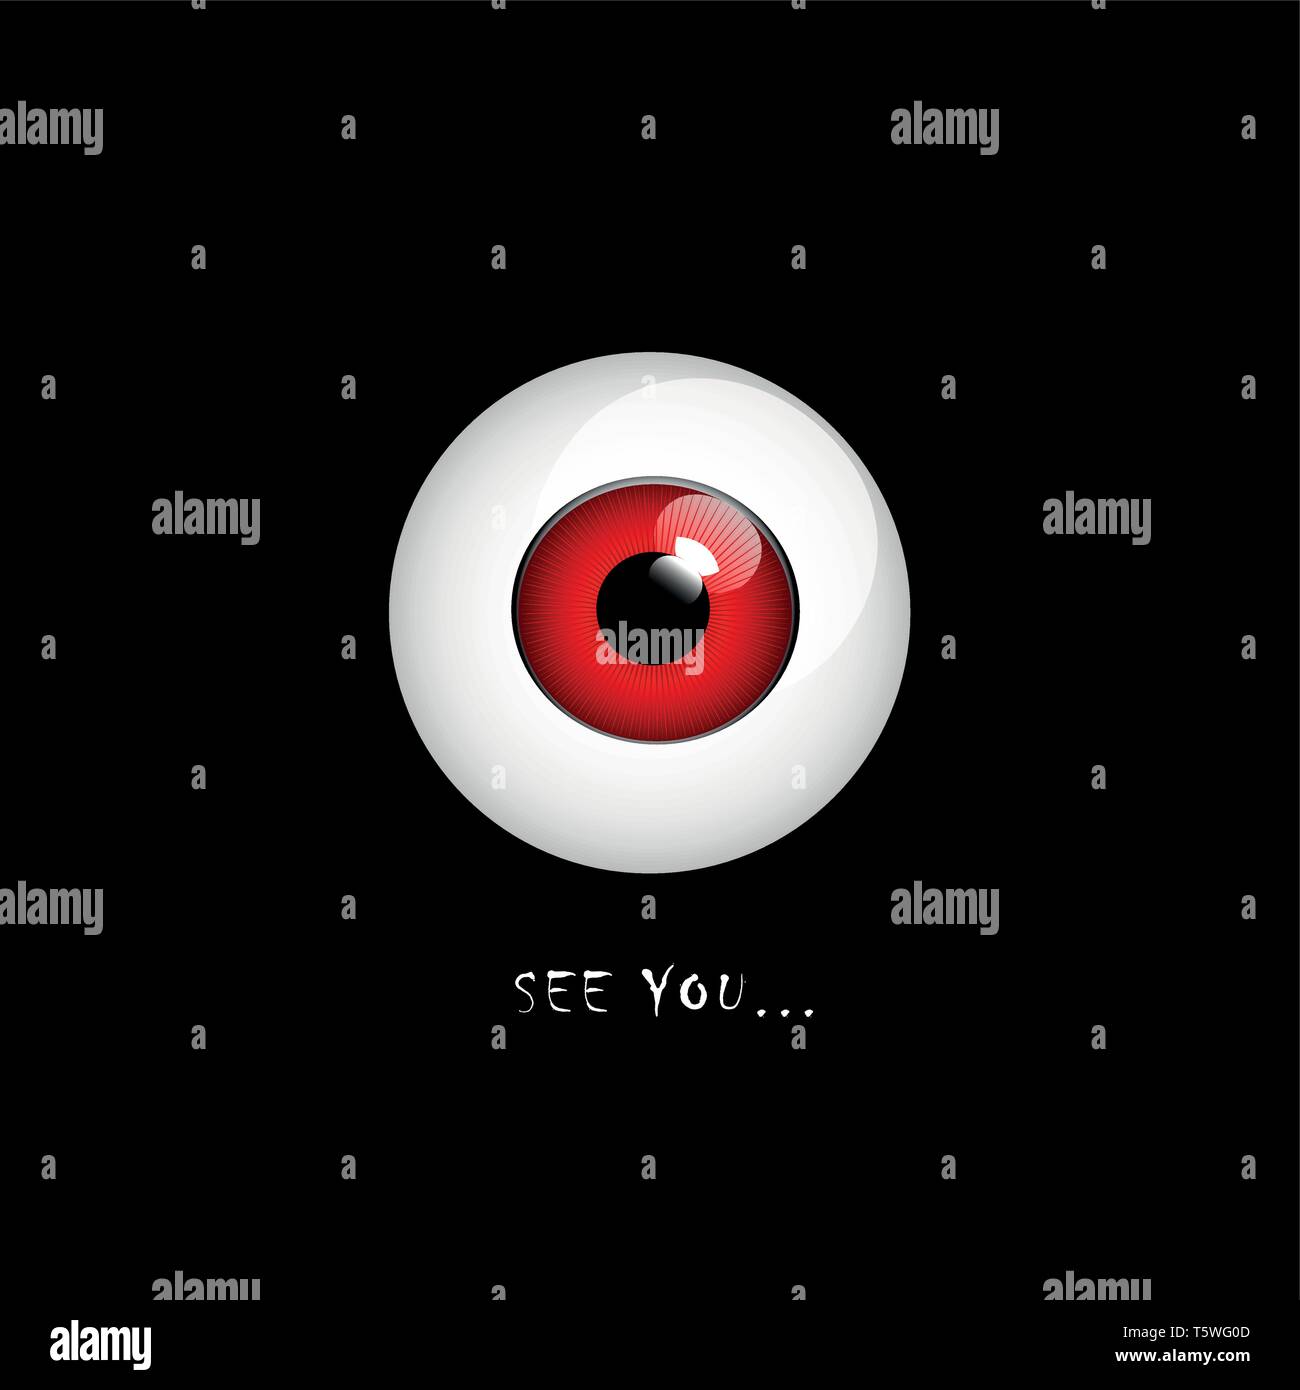 scary red eye on black background for halloween vector illustration EPS10 Stock Vector